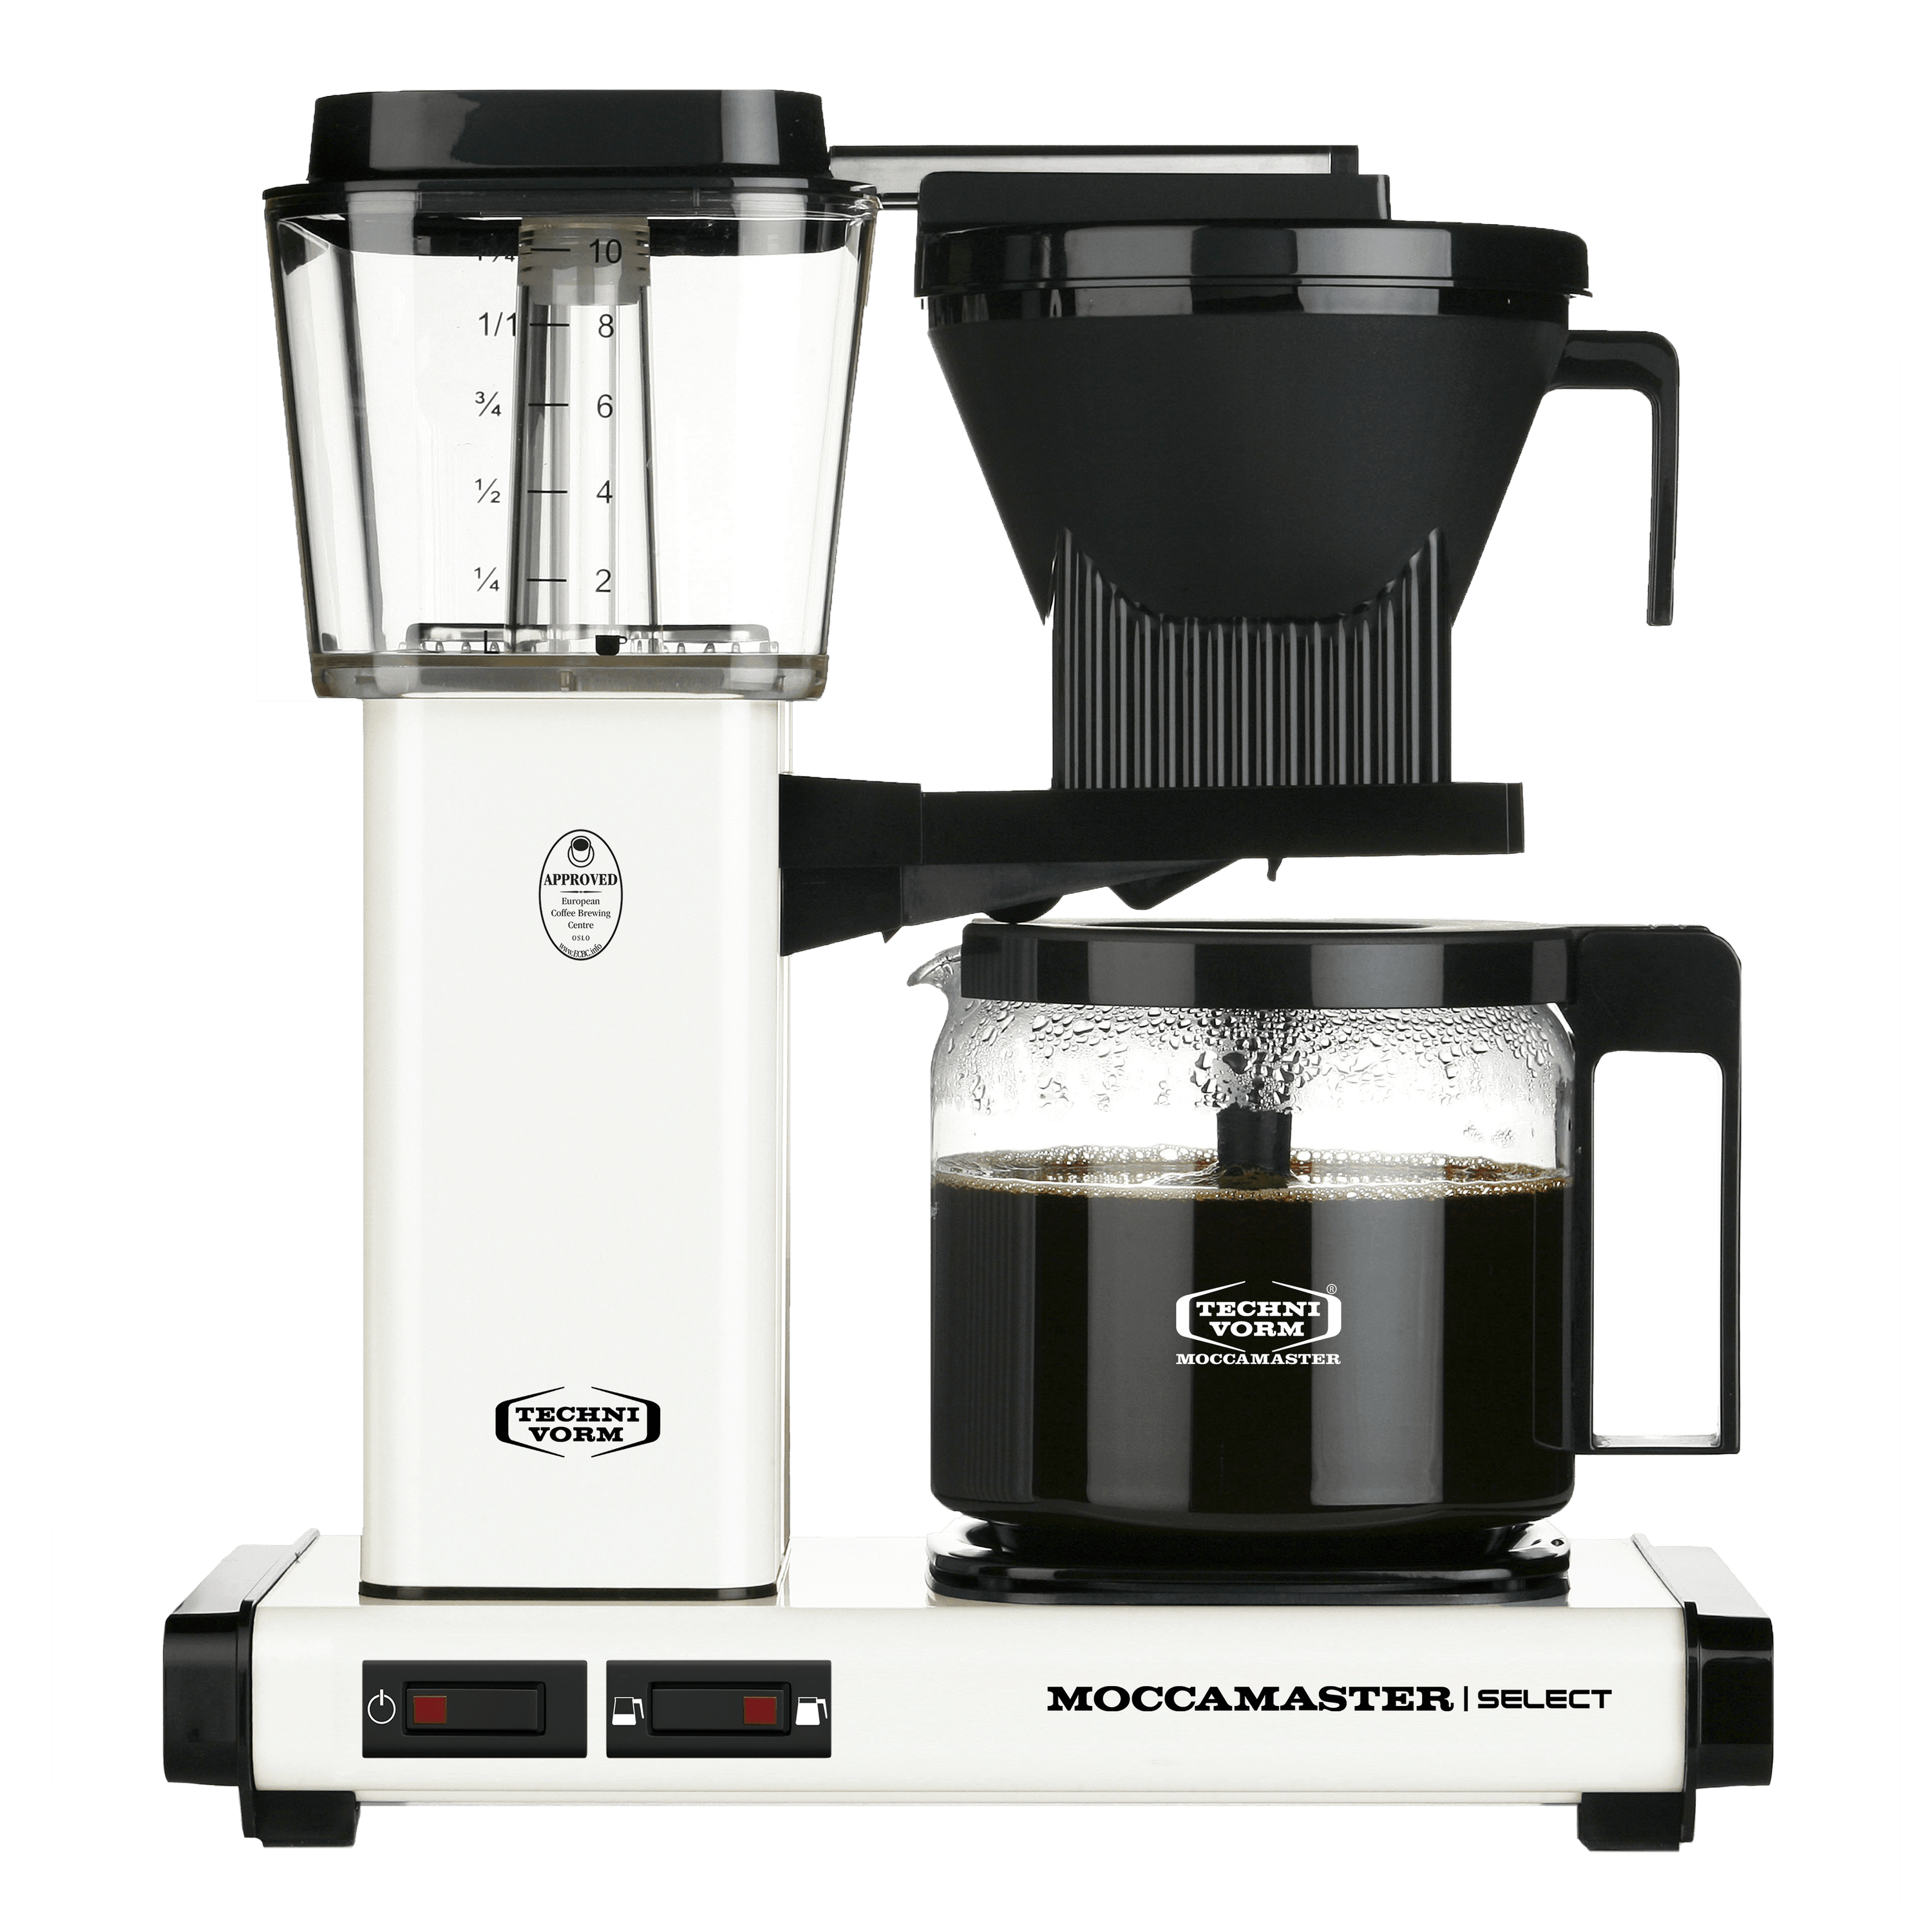 white, off-white moccamaster kbg select coffee machine